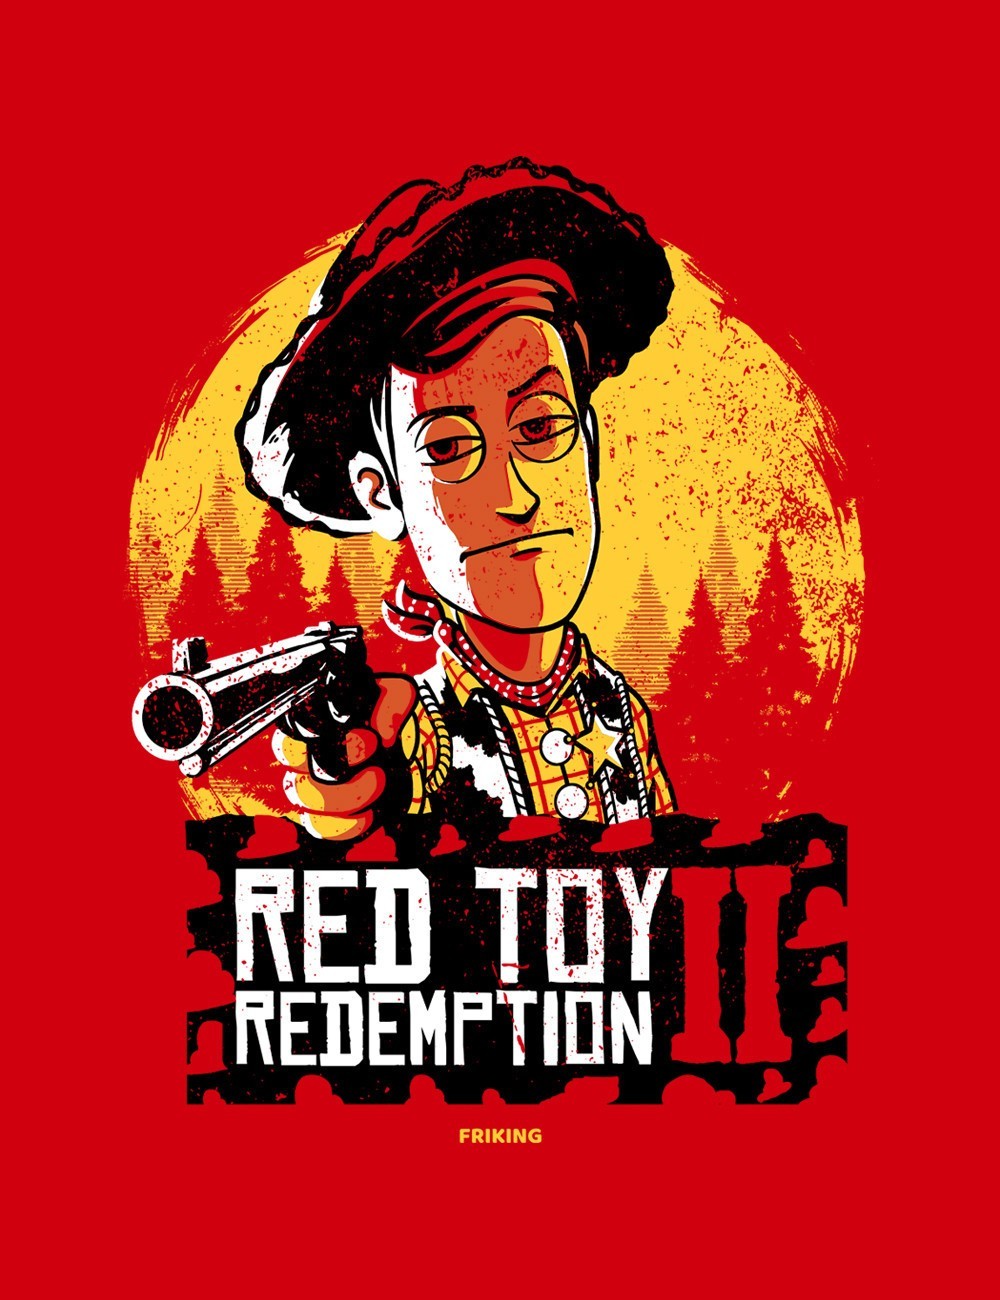  Red toy redemption II 